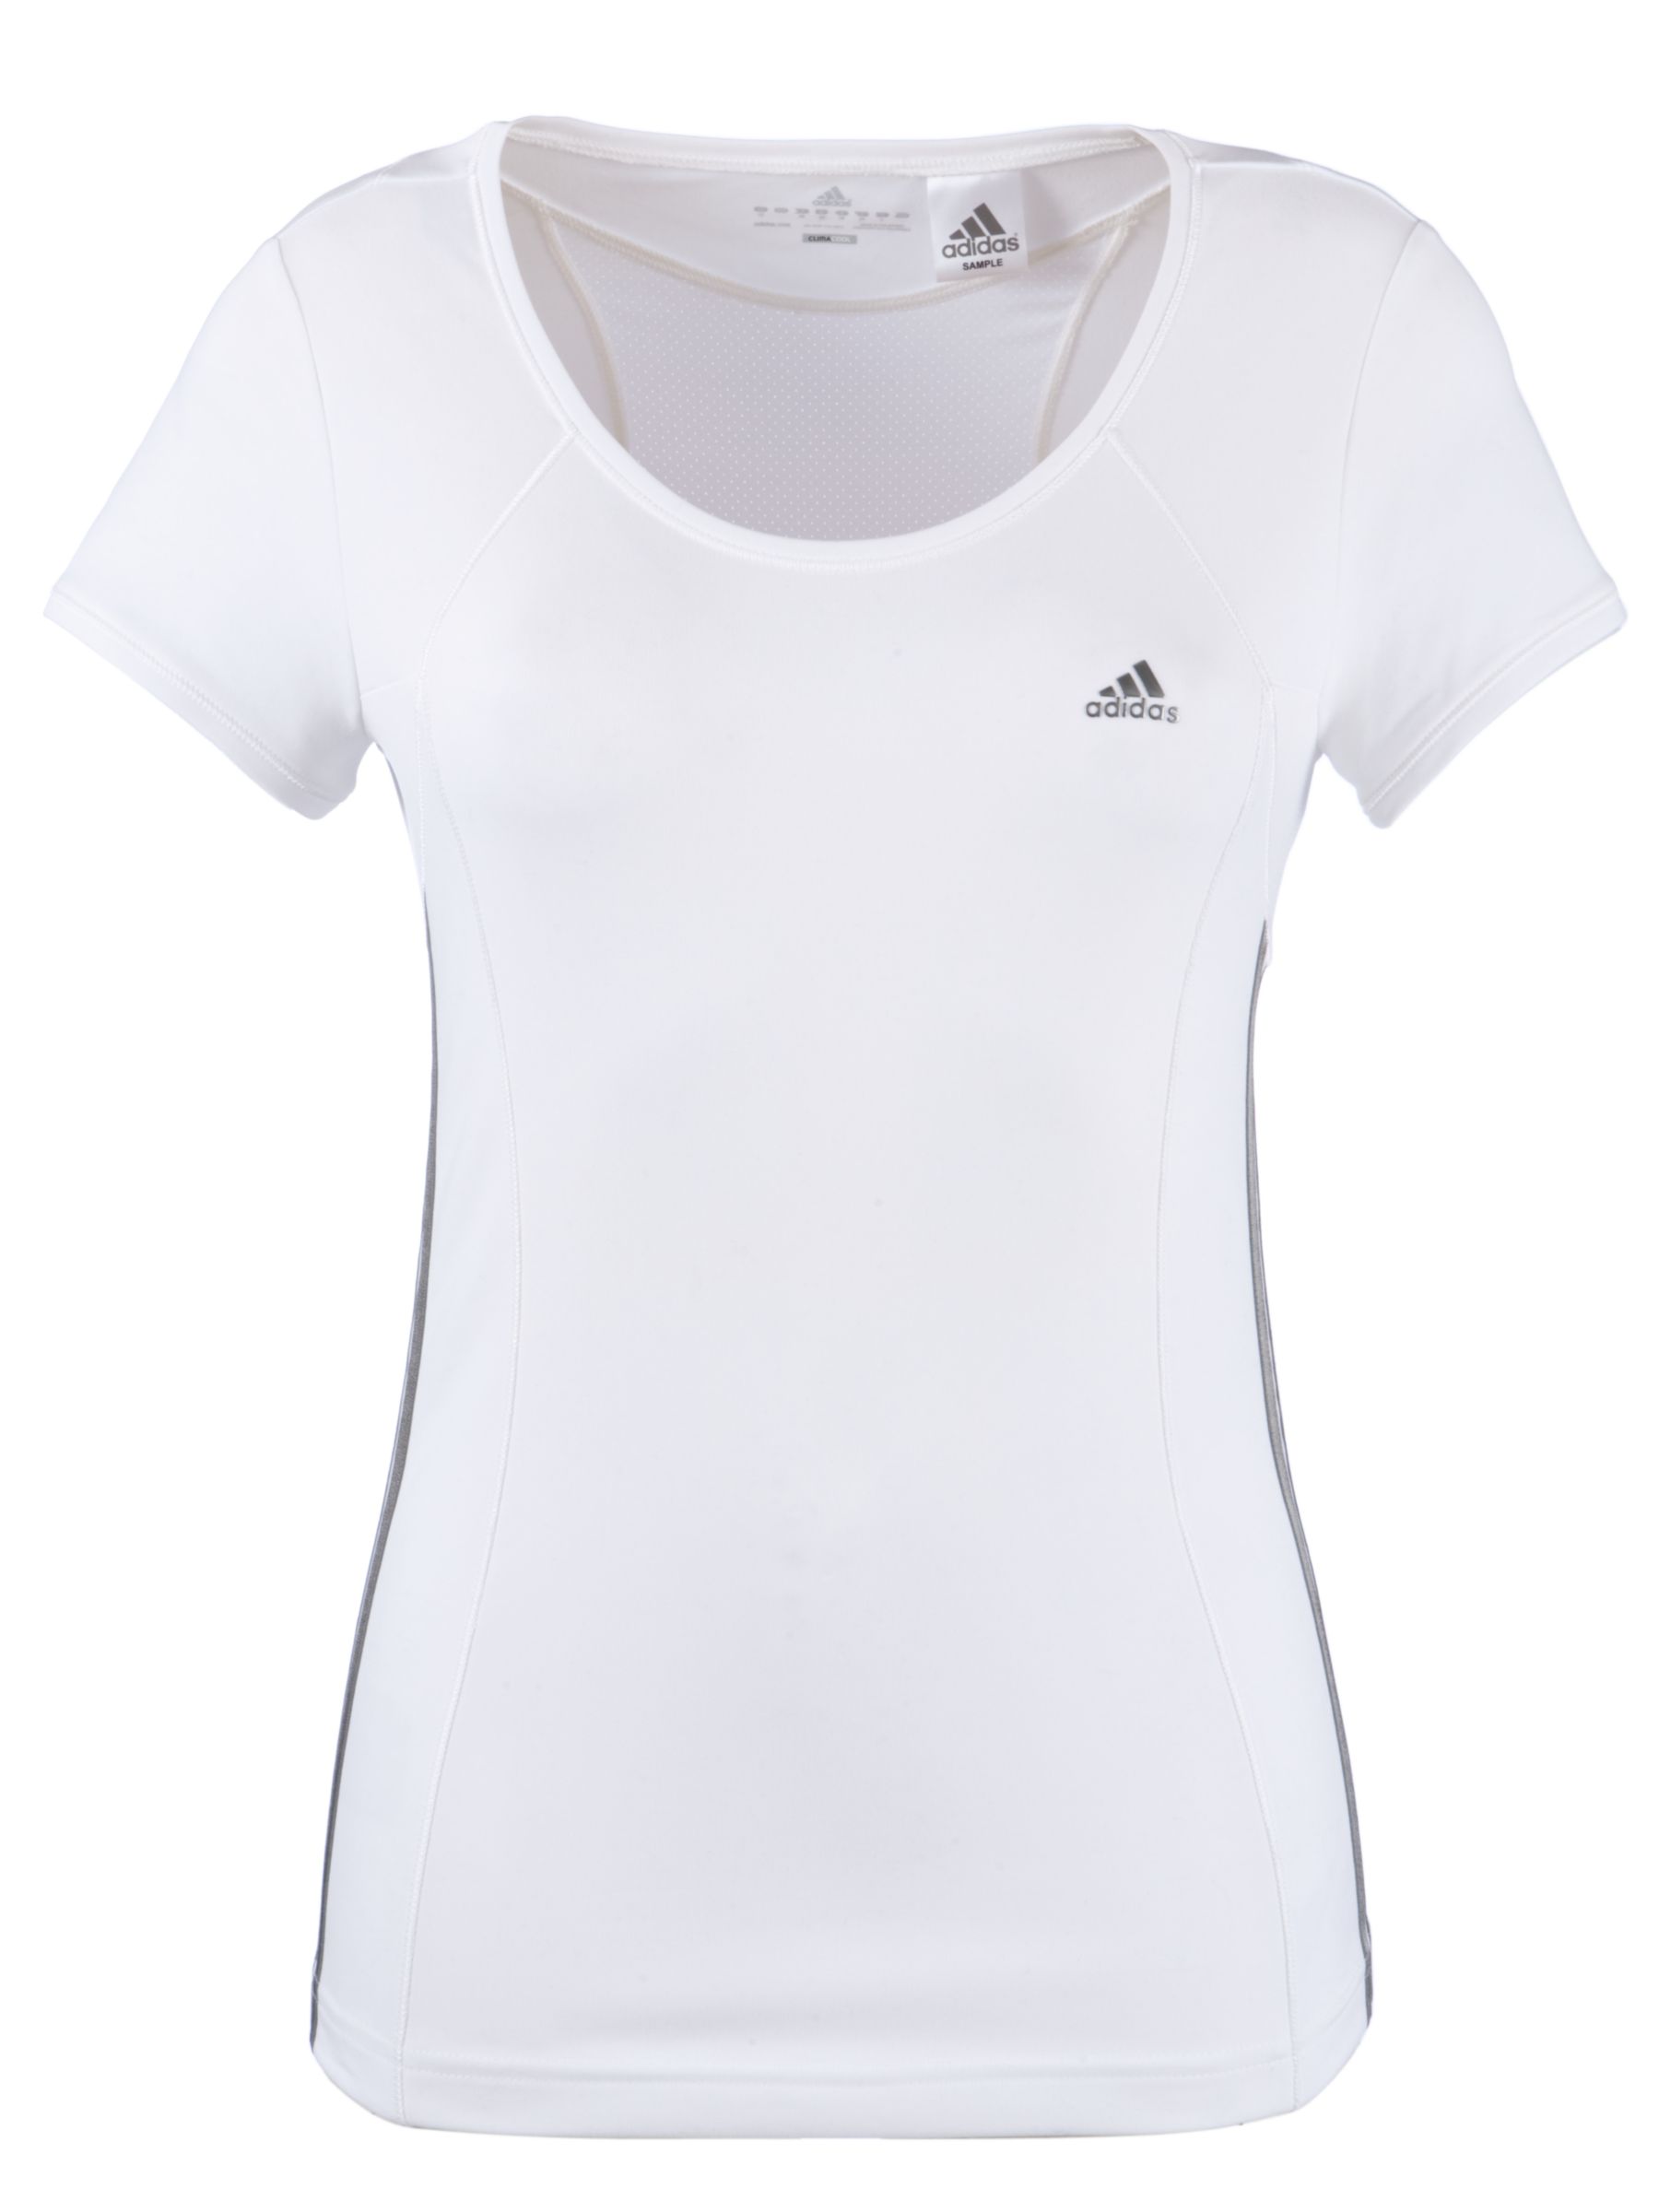 Adidas Clima Core T-Shirt, White/black